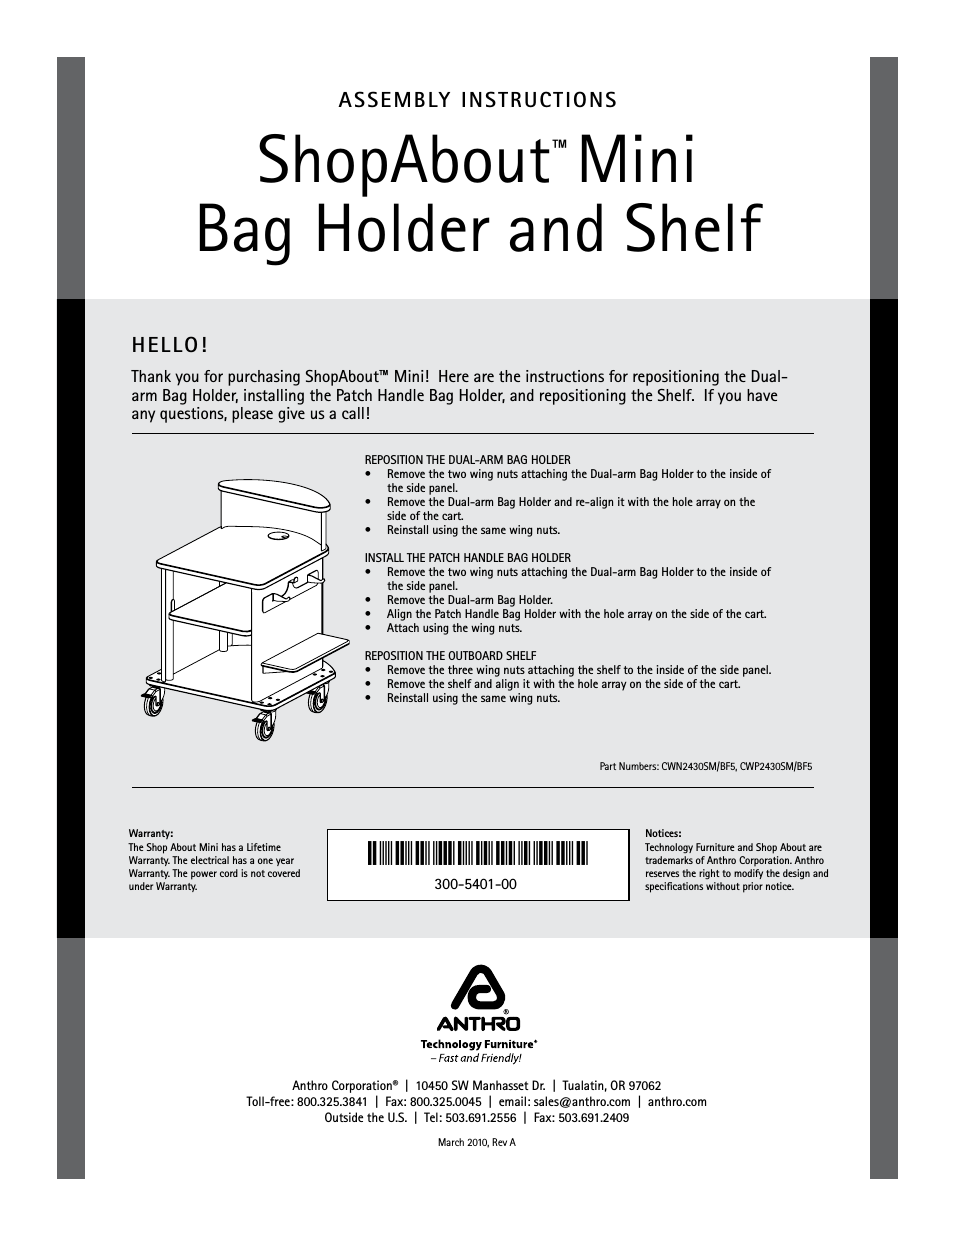 ShopAbout Mini Assembly Instructions